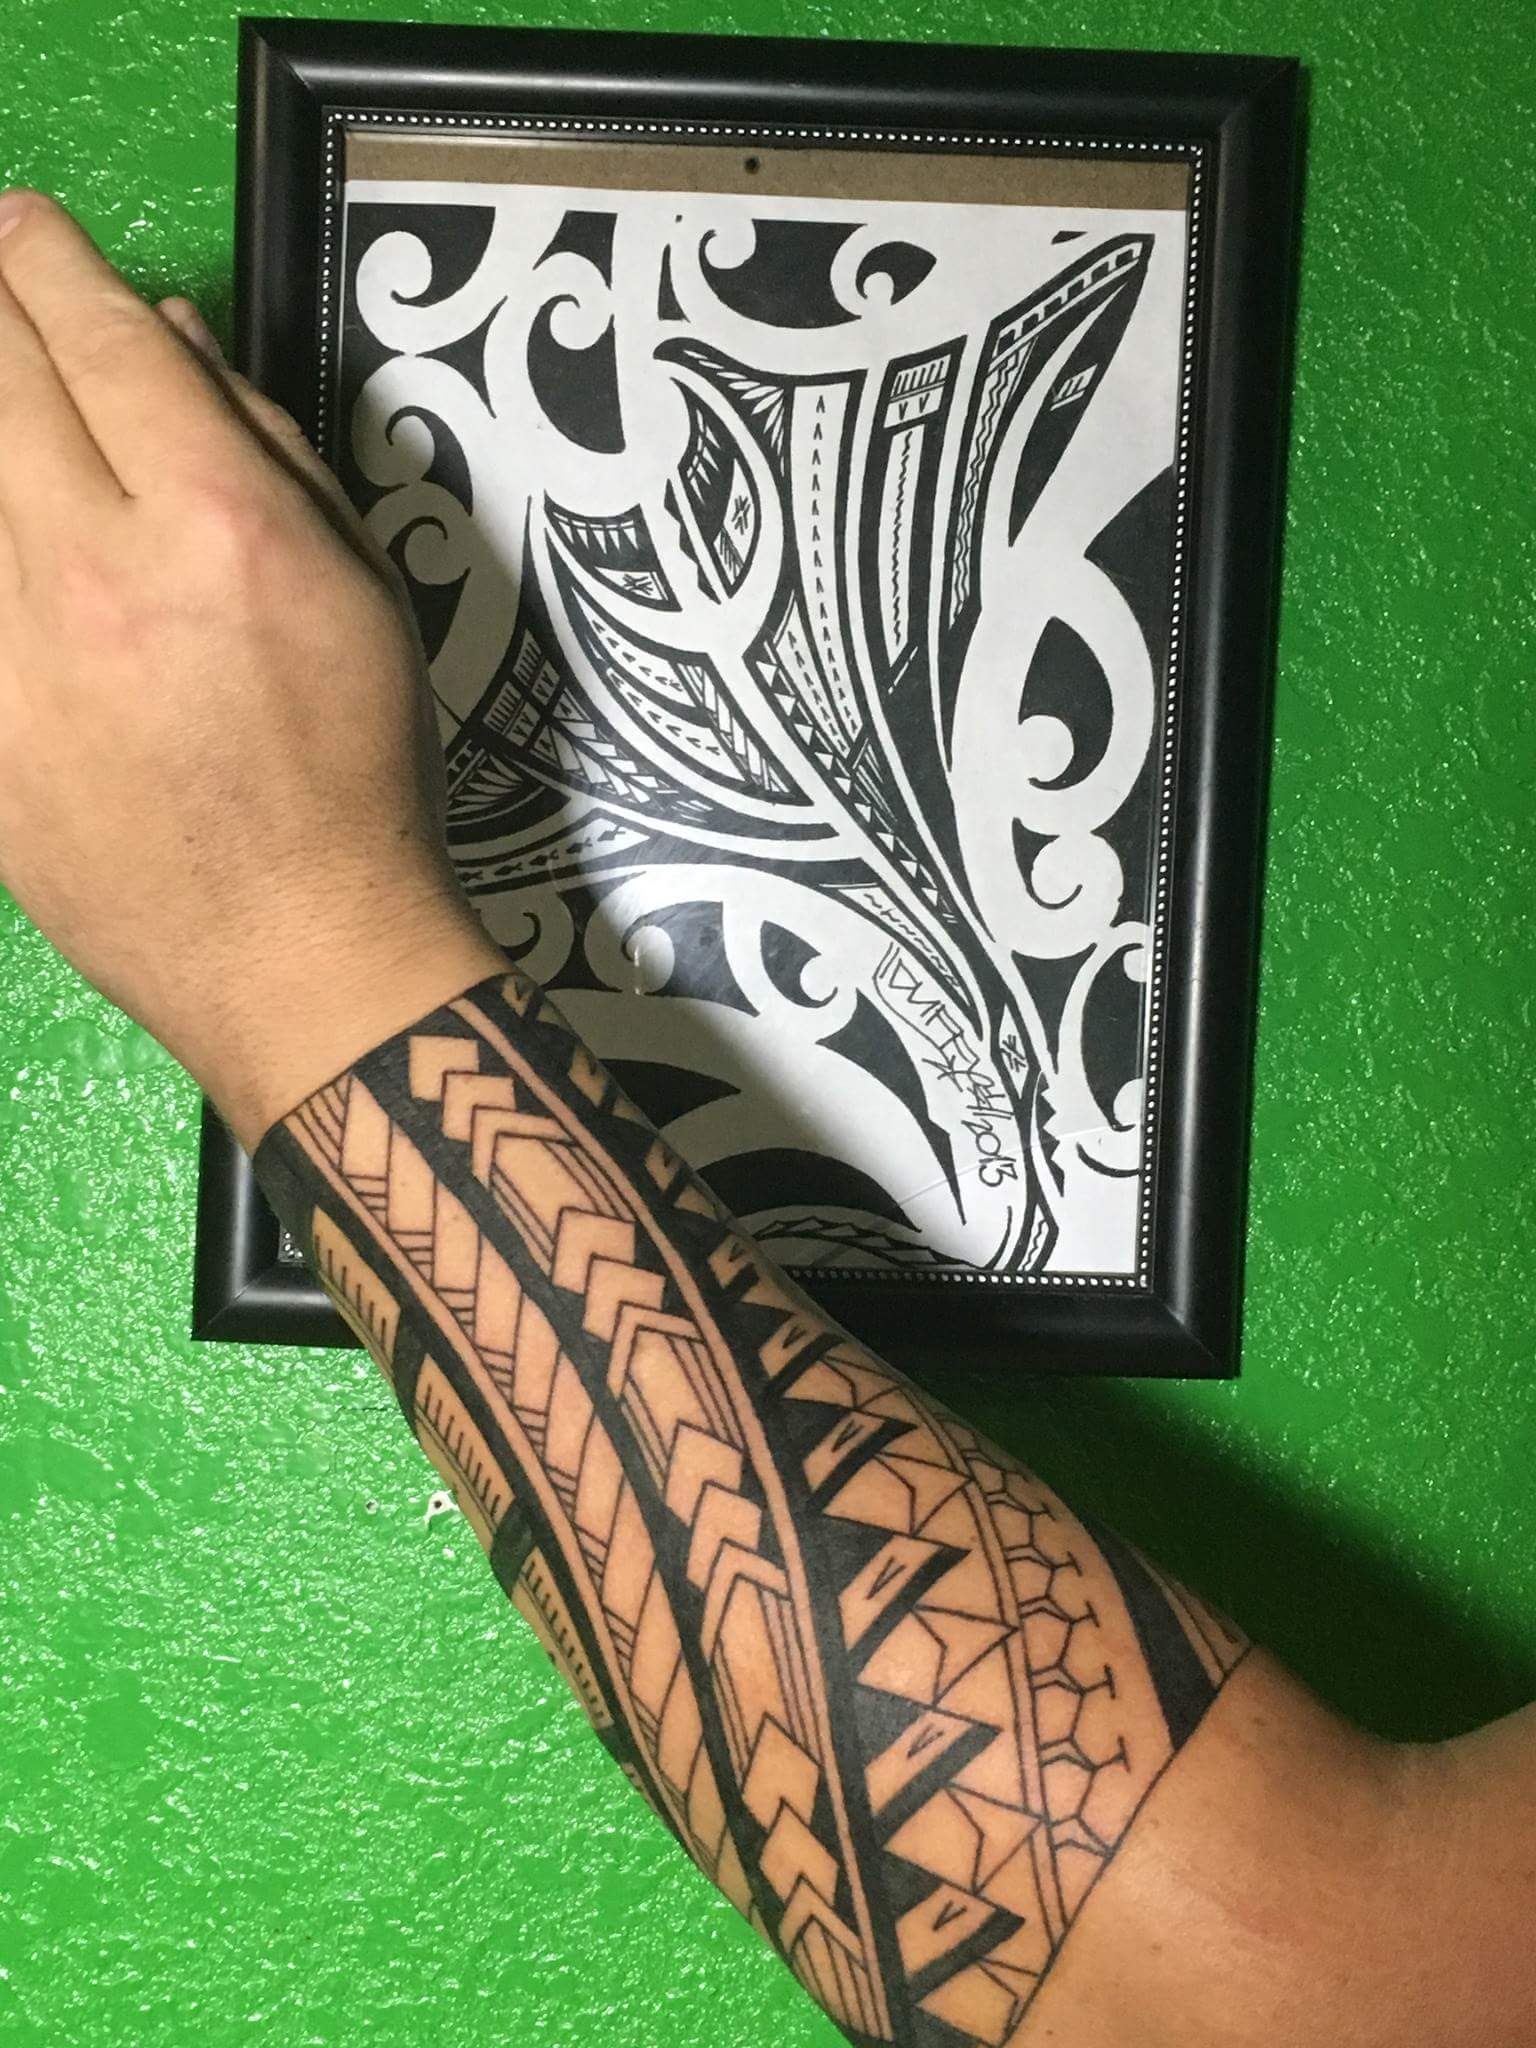 Gulf Coast Ink  Studio 251 on Twitter Scorpion by Shawn DeWayne tattoos  foley Alabama httpstcoz62WSo7heD  Twitter